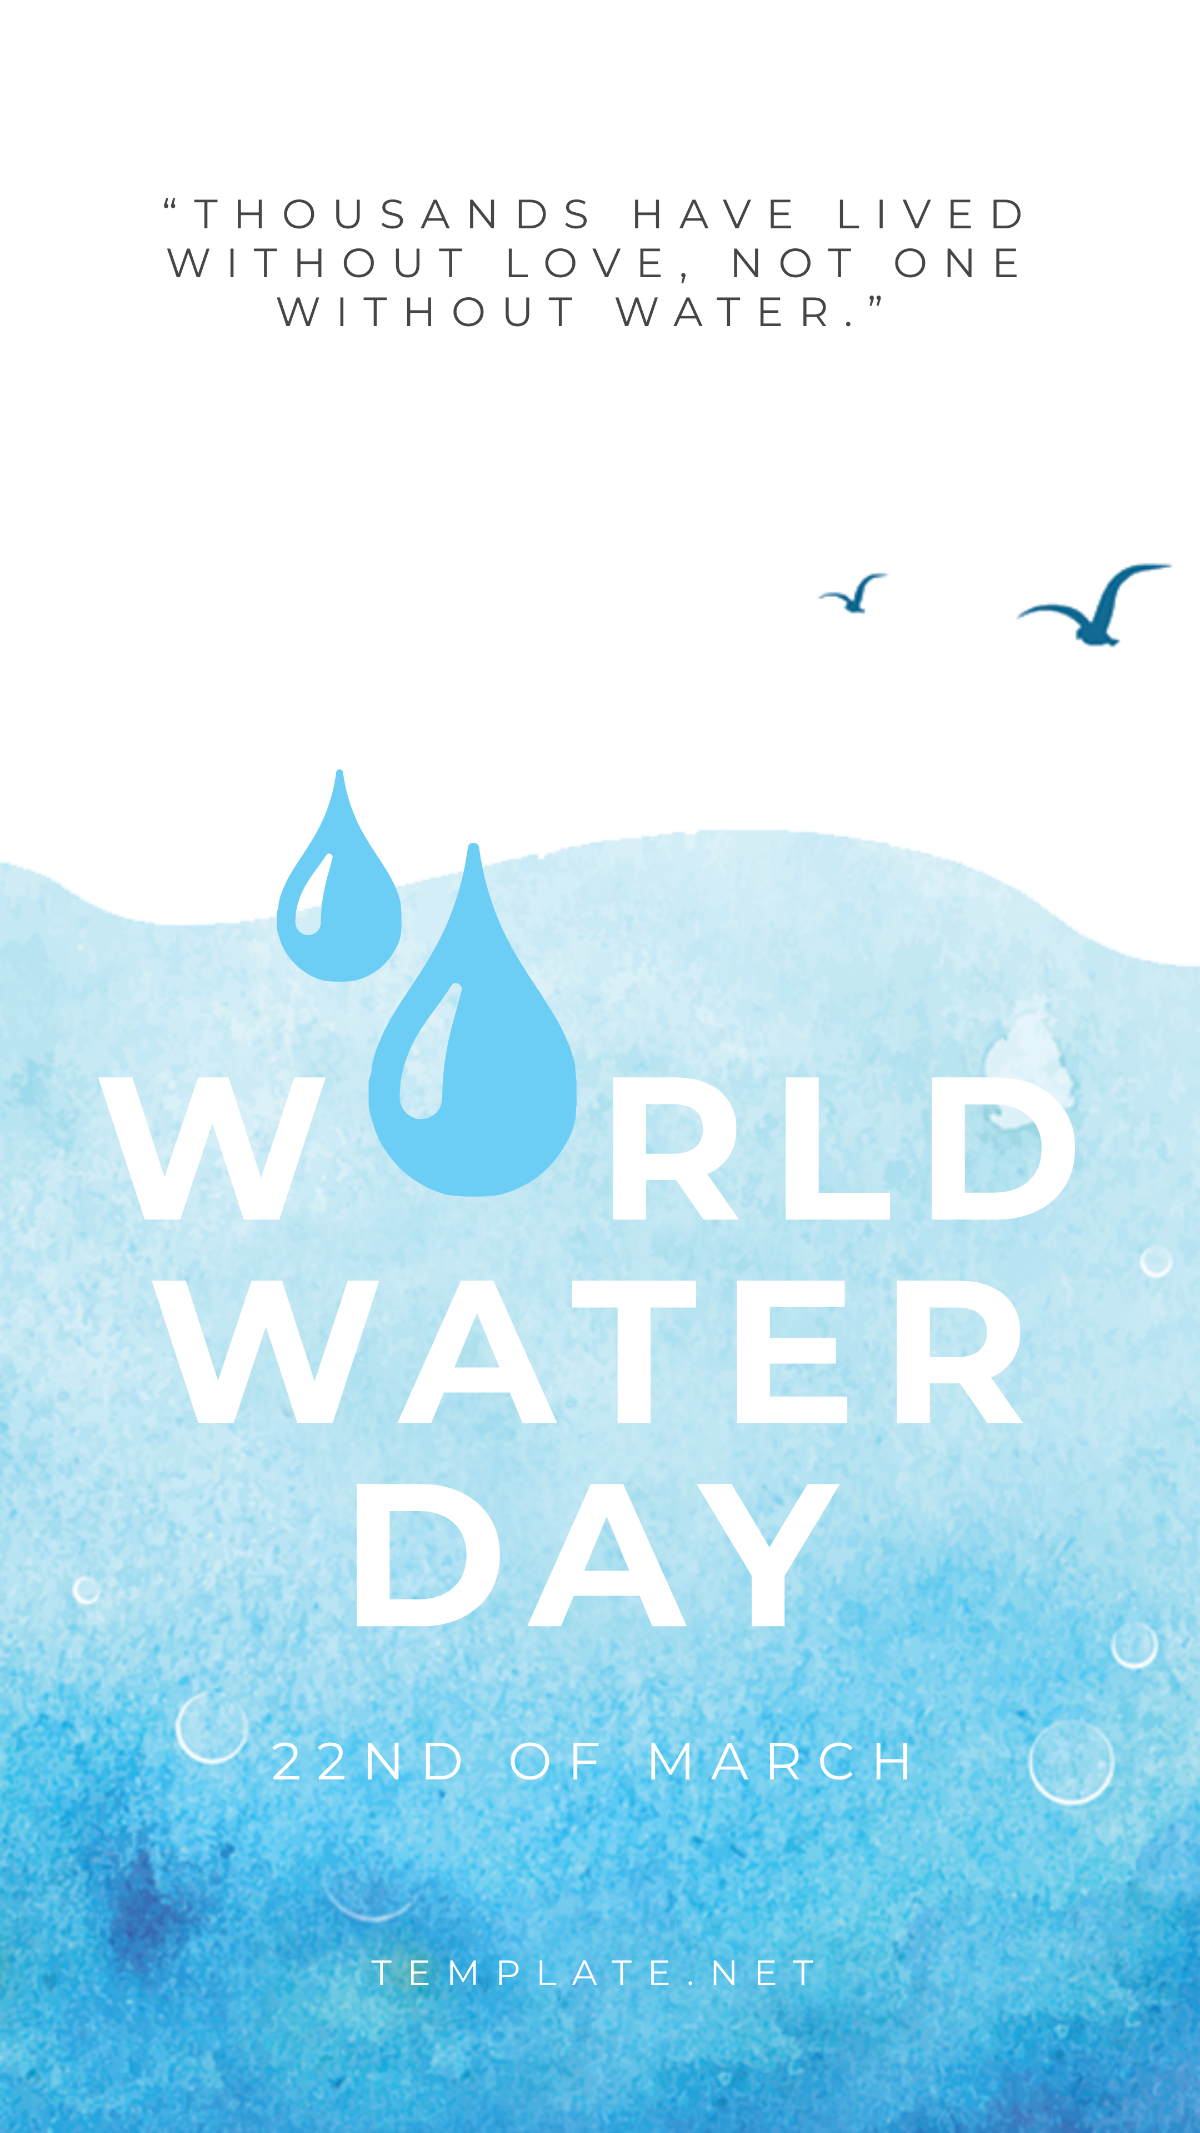 World Water Day Whatsapp Image Template